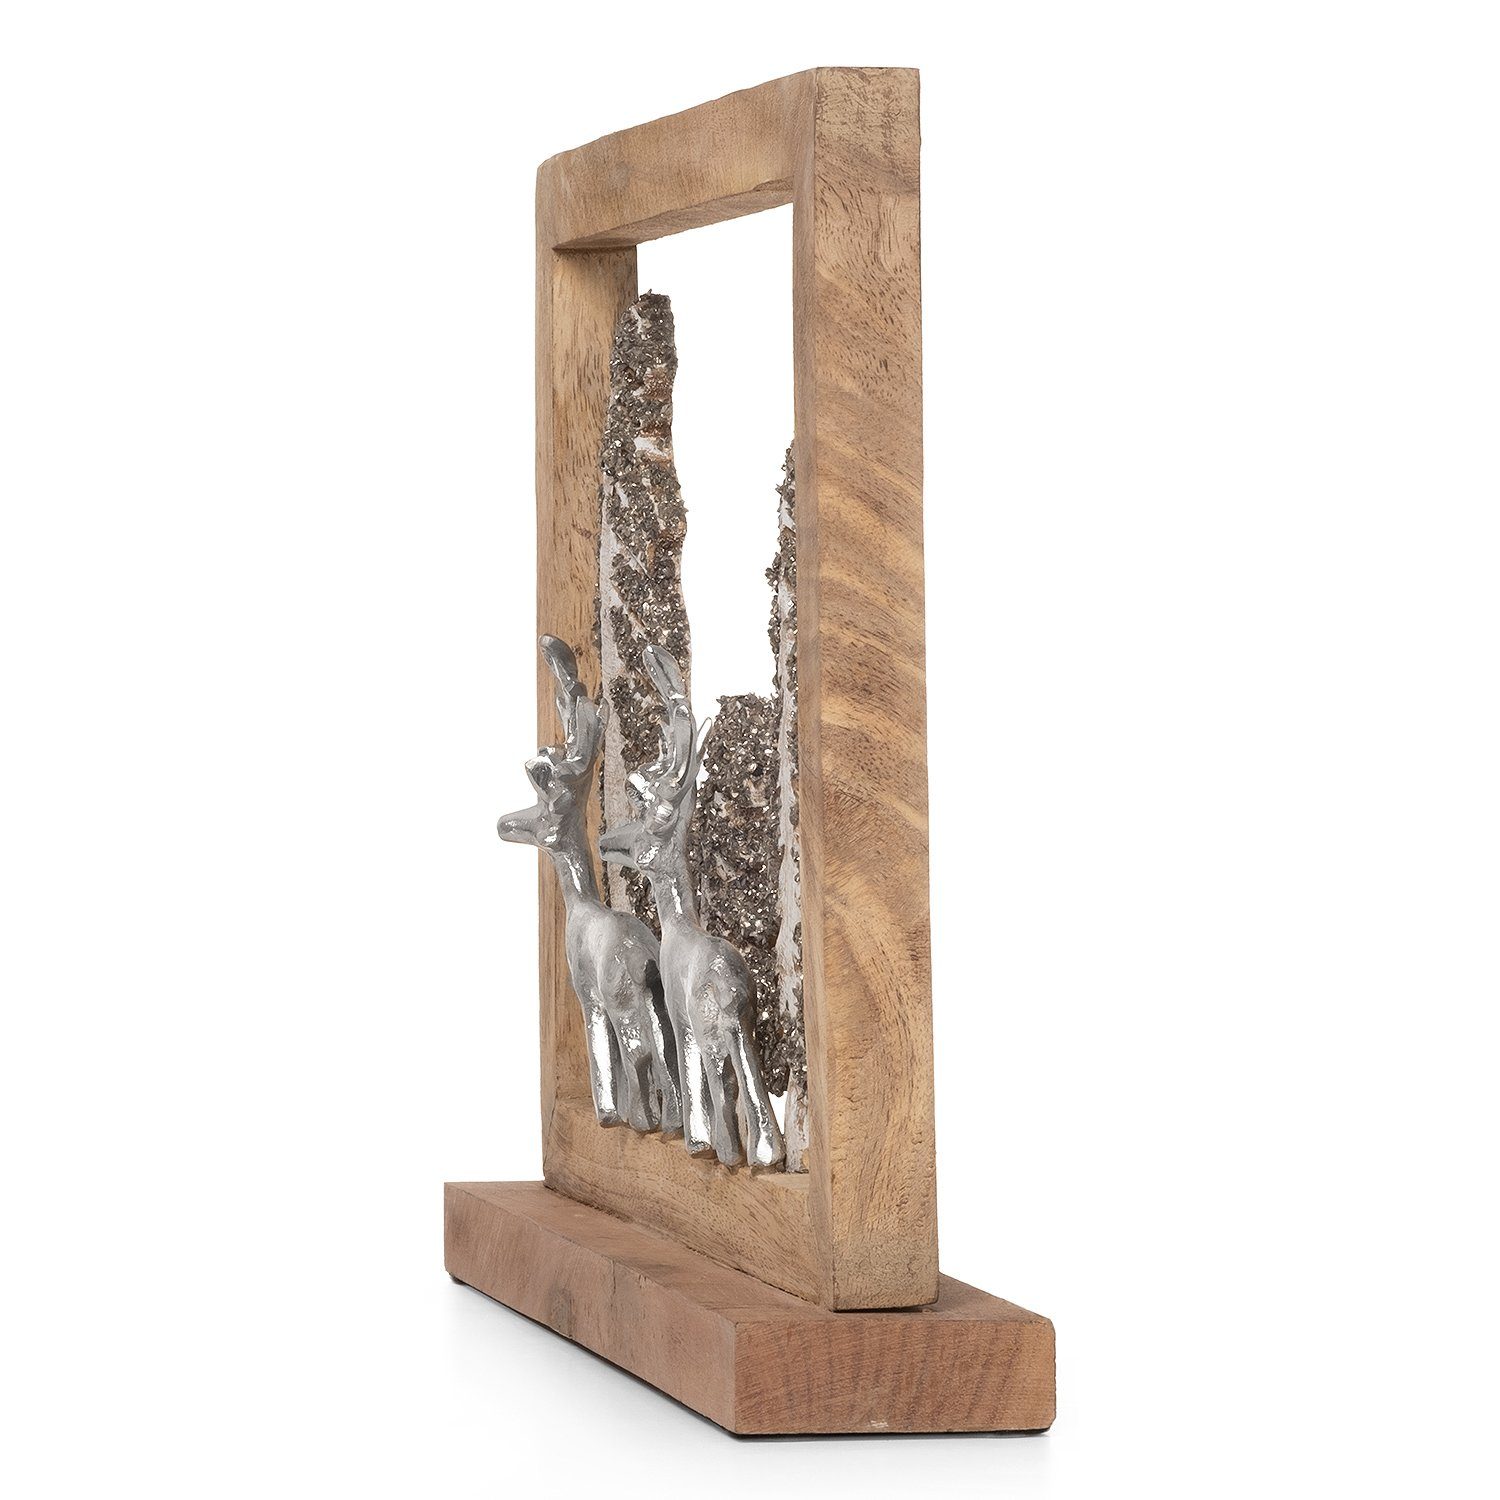 Moritz Skulptur Tischdeko Rentiere Weihnachtsdeko Wald Tischdeko, Fensterdeko, Holzdeko, cm, Wanddeko, 33 Holz, im